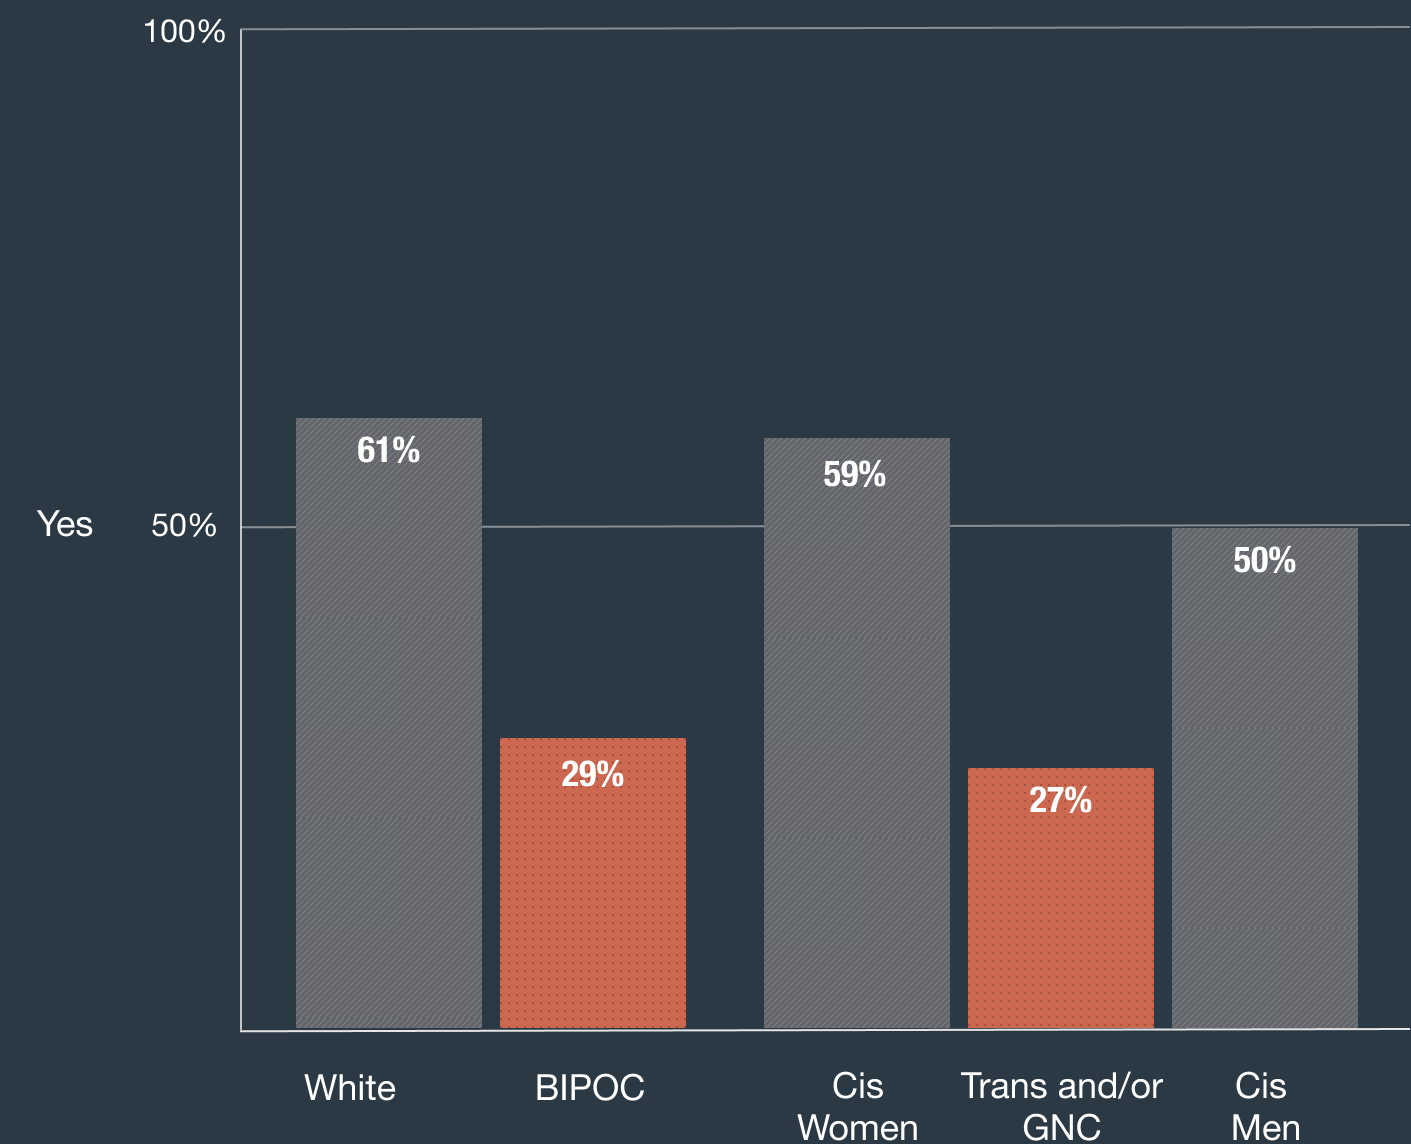 White: 61%, BIPOC: 29%, Cis Women: 59%, Trans and/or GNC: 27%, Cis Men: 50%